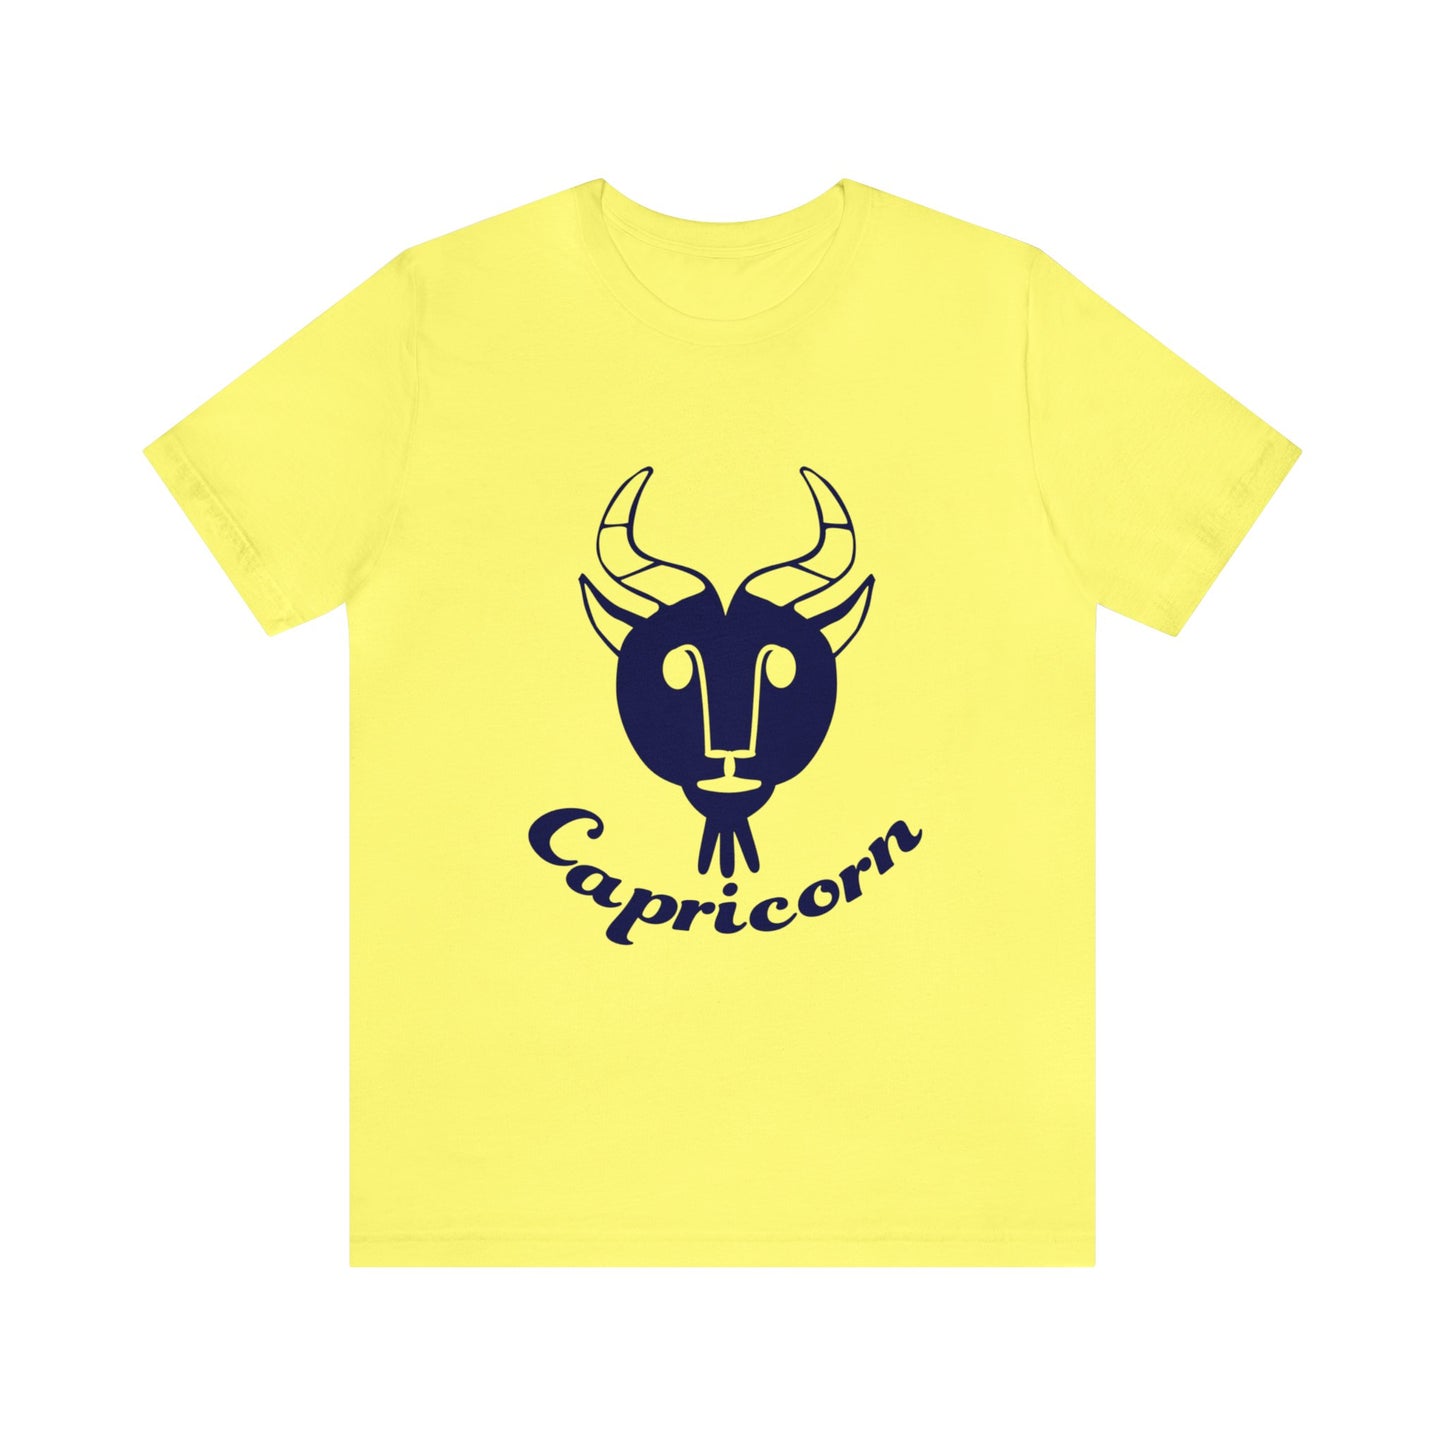 Capricorn t-shirt